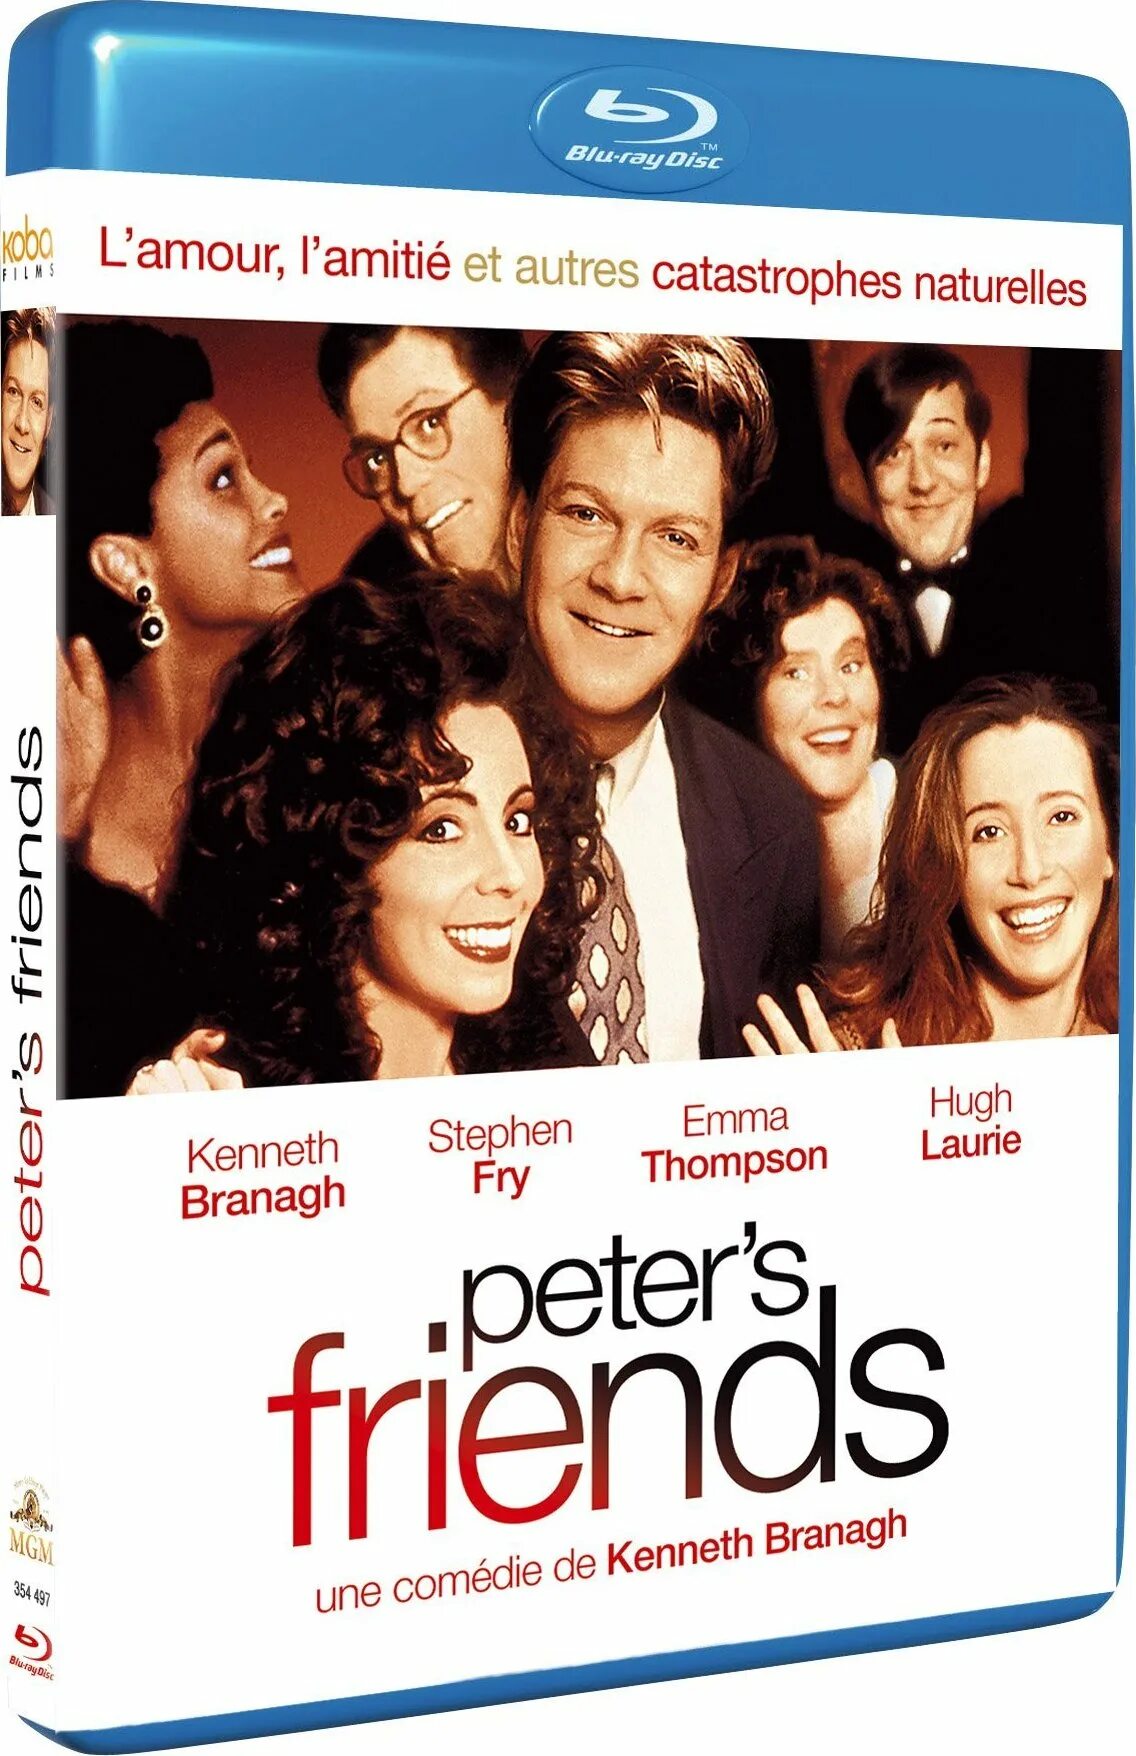 Peters friends. Peter's friends 1992. Peter’s friends (1992) Emma Thompson. Friends Питер. Друзья в Питере.